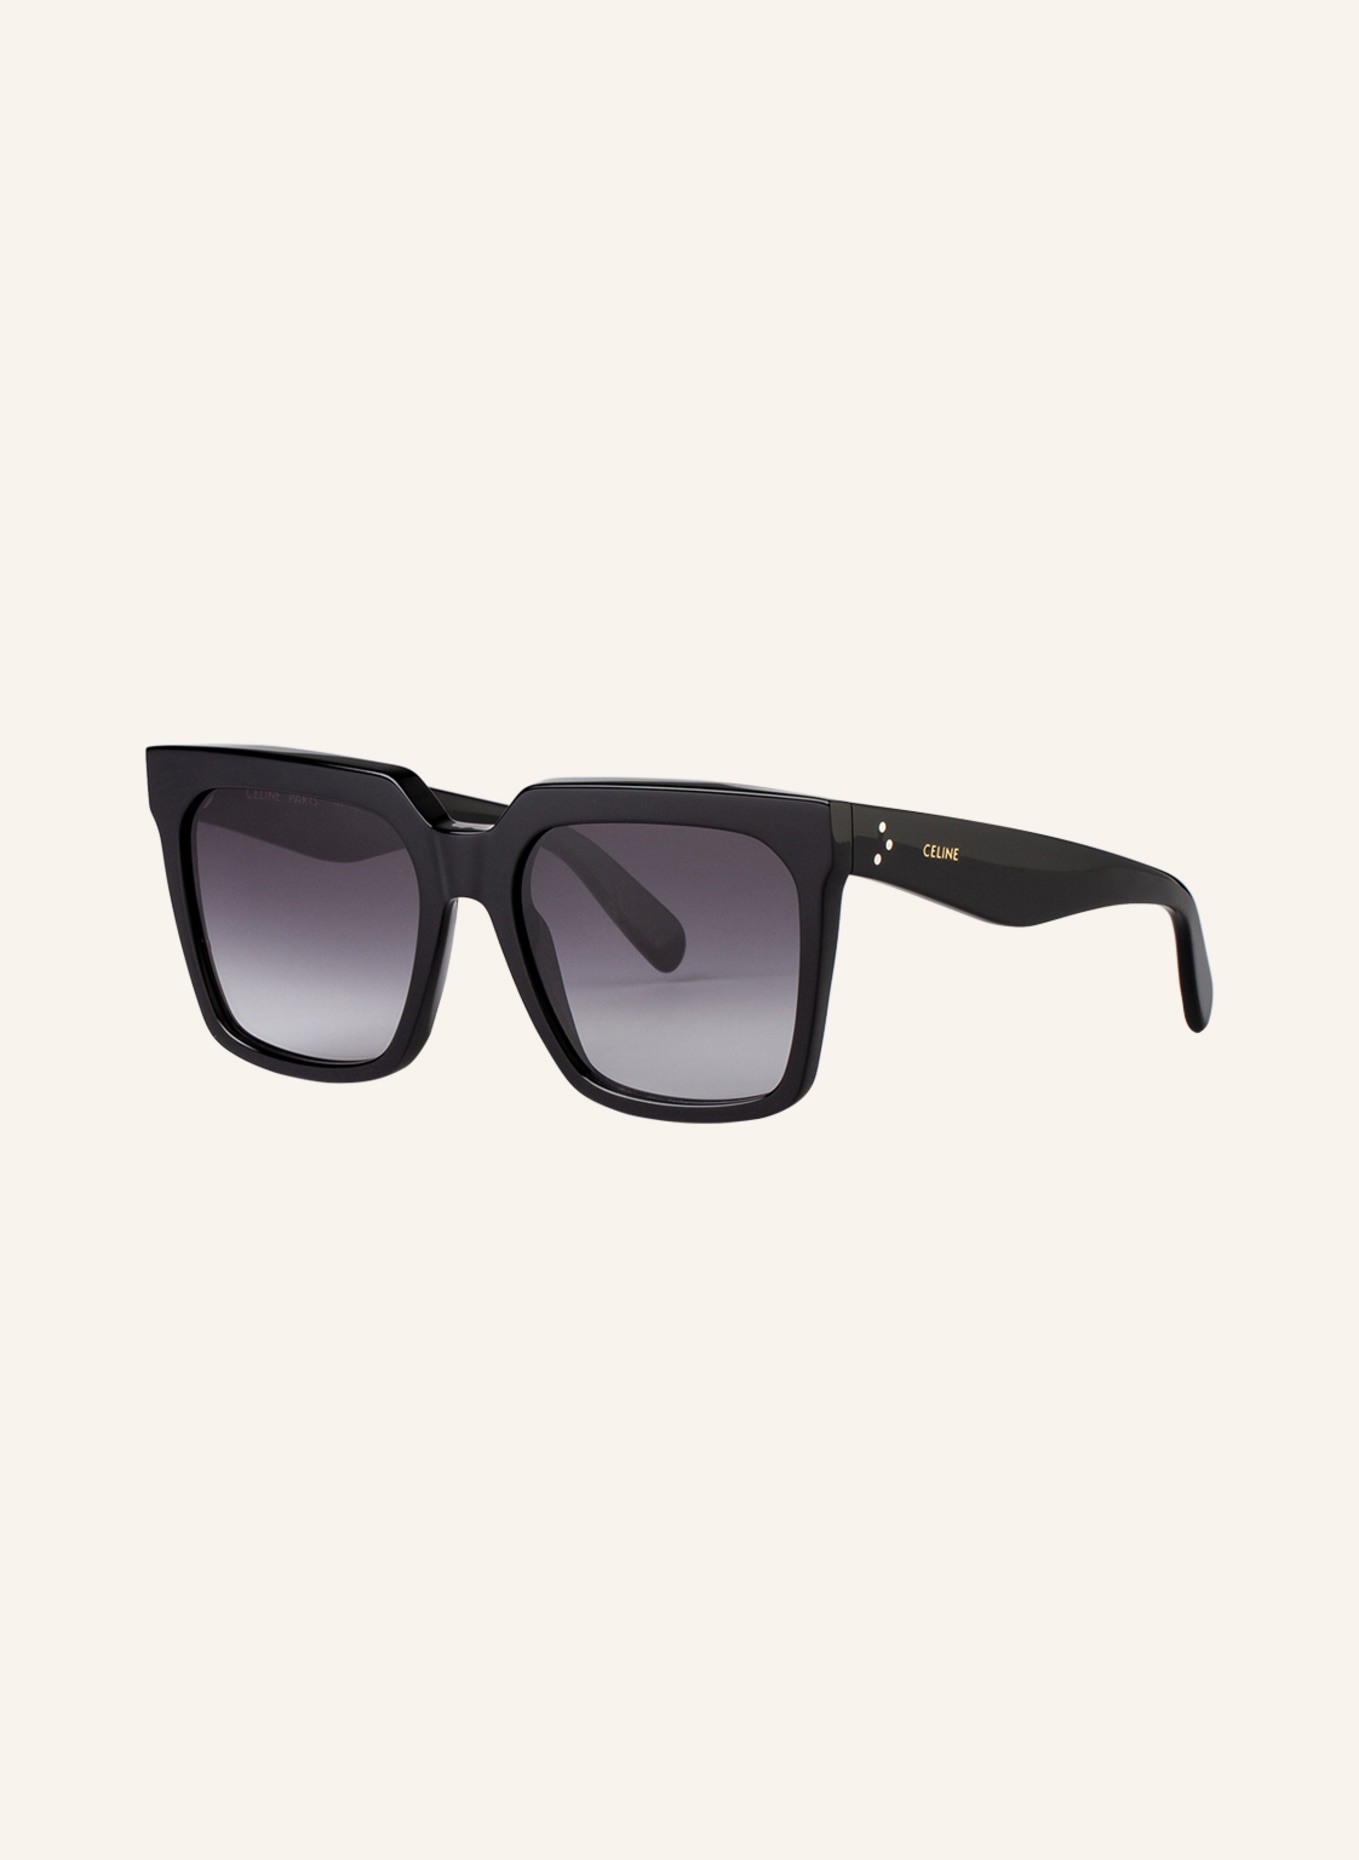 CELINE Sunglasses CL000215 in 1100l1 - black/ gray gradient